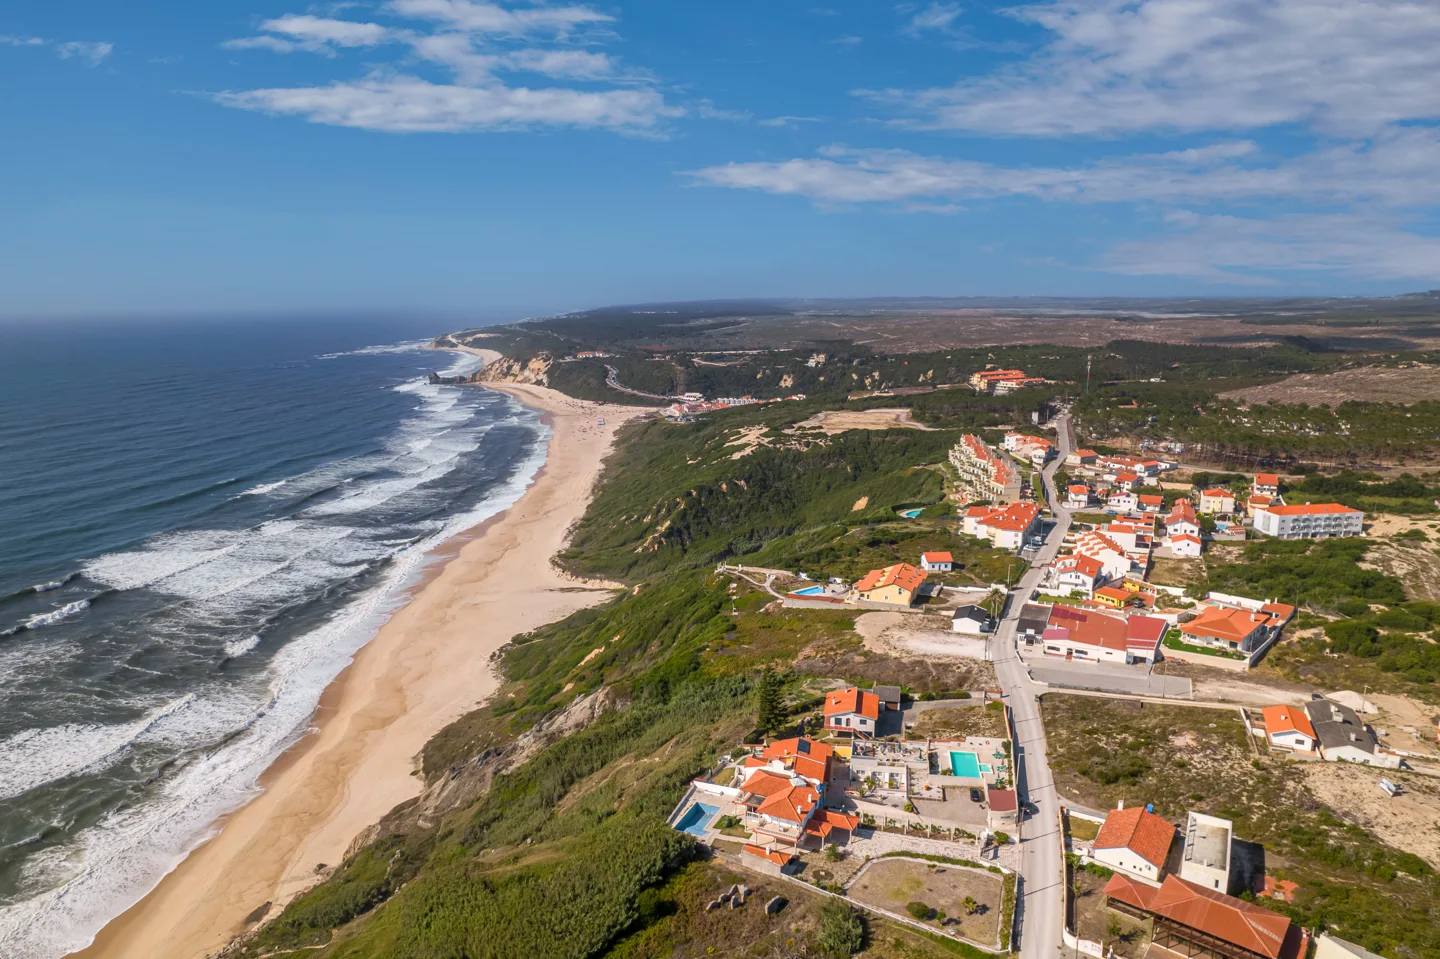 Discover the Magnificent Casa da Mina Over the Vast Atlantic